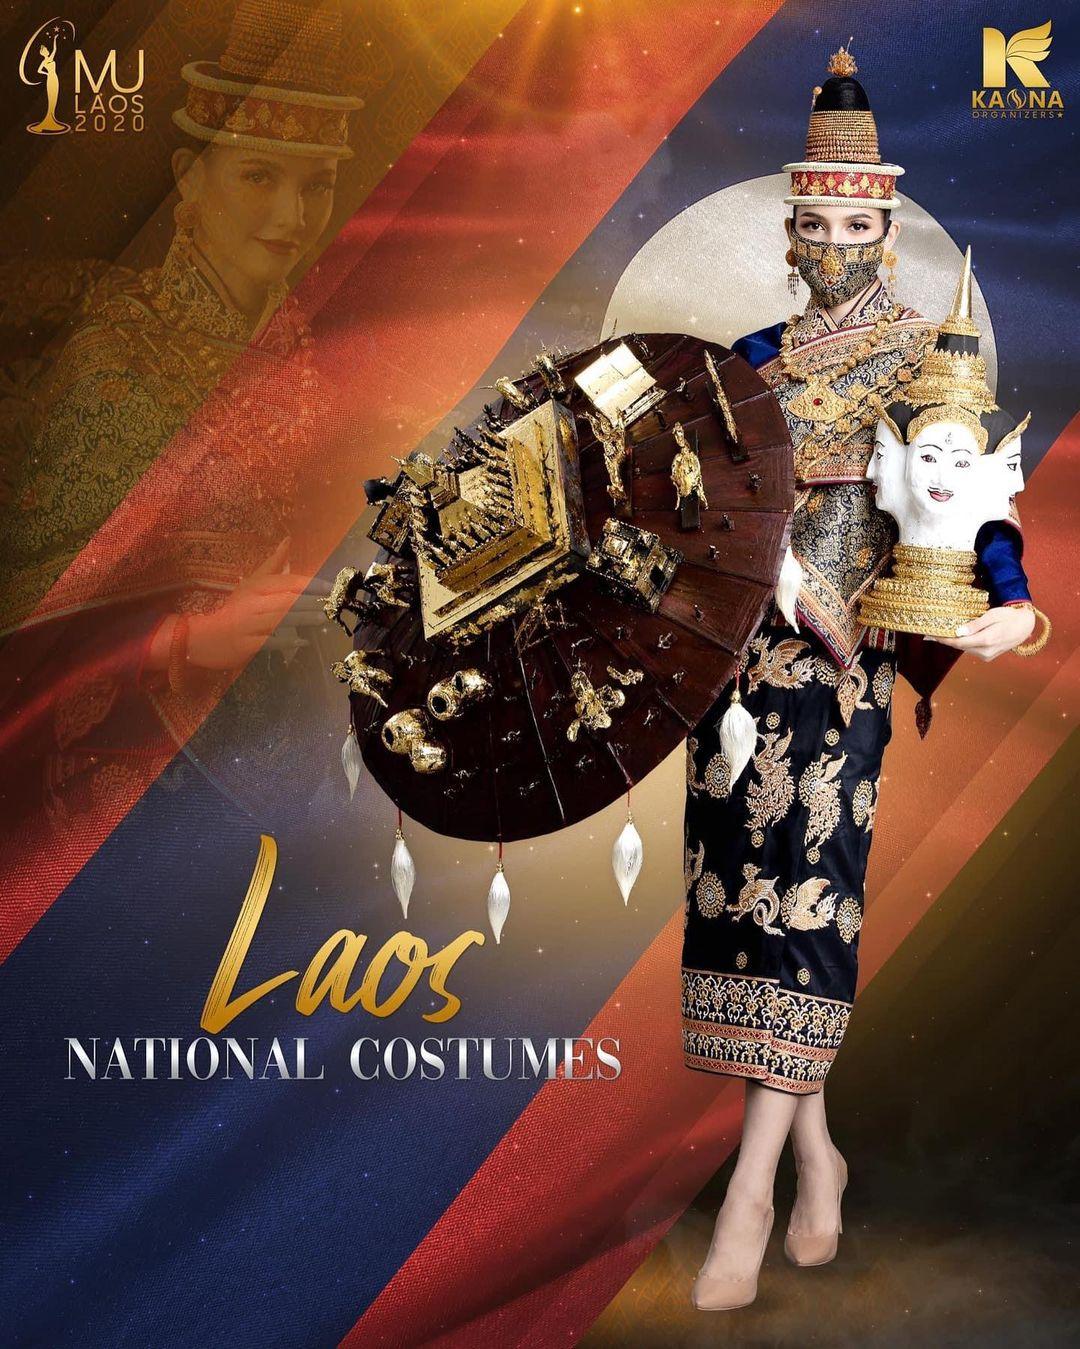 class="content__text"
 Officials Announce National costume Miss Universe Laos 2020 
Christina Lasasimma 
ມູນຄ່າ 100,000,000 ກີບ 
ອະລິຍະທຳແບບລ້ານຊ້າງ 
ເຂົ້າກຸ່ມ Whatsapp FC ເມົ້າມອຍ link: https://chat.whatsapp.com/HZHWq9gdUAw4lhnmm4Zl4l 
 